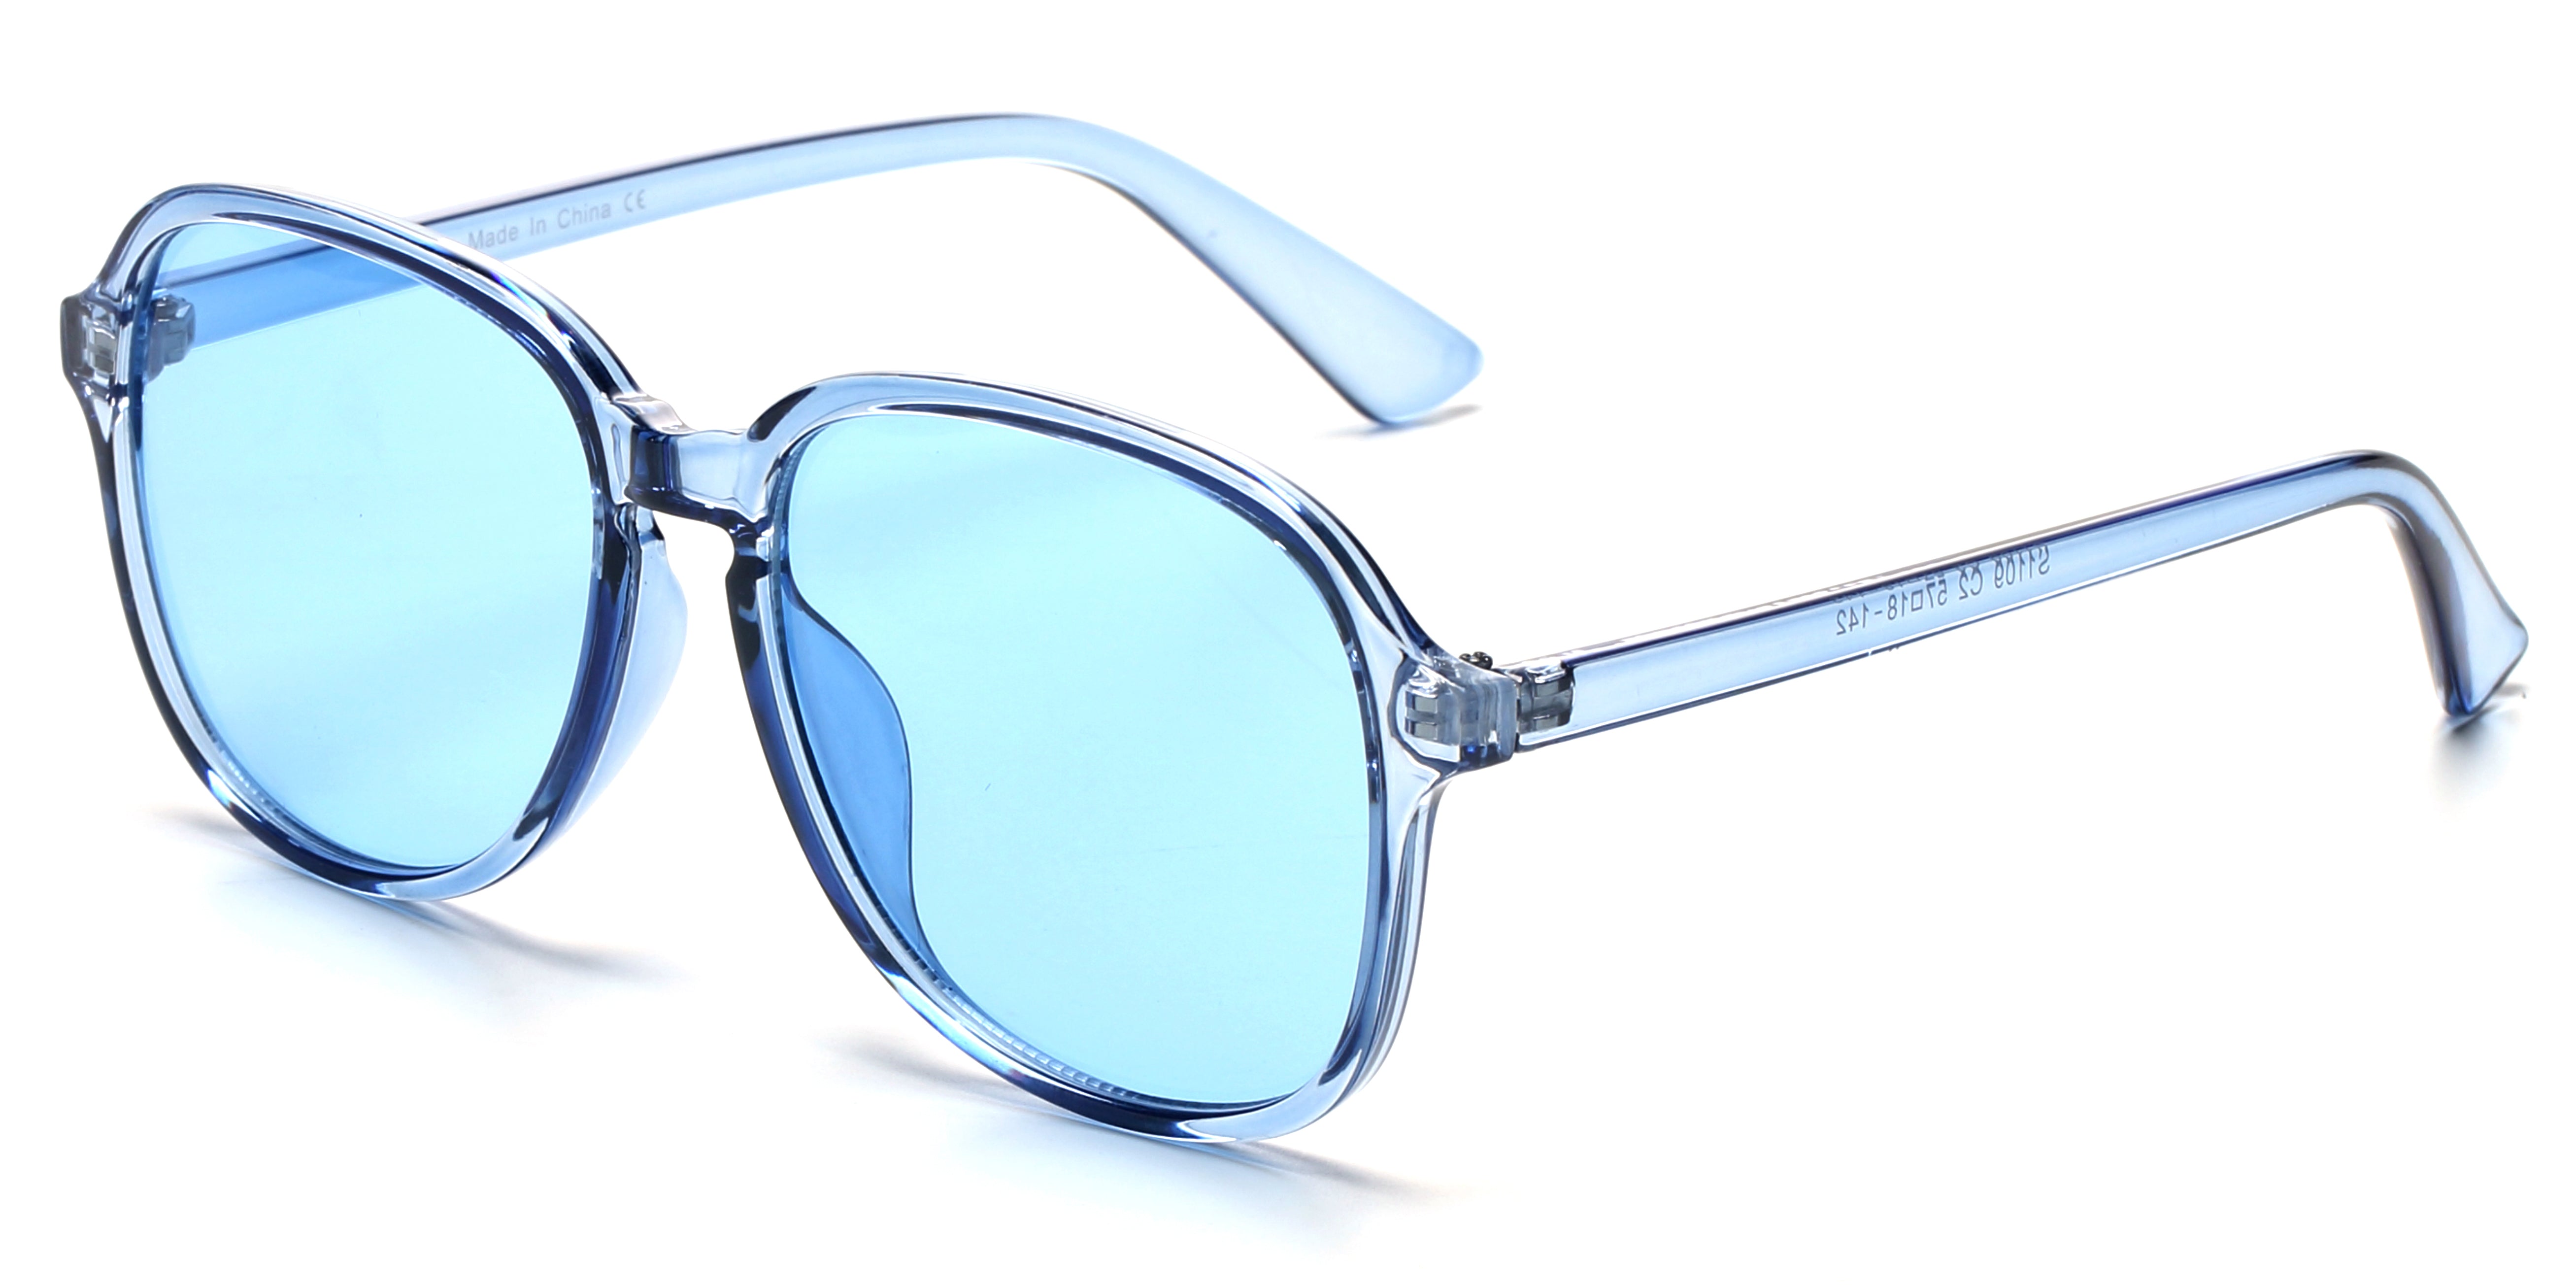 S1109 - Round Tinted Oversized Women Fashion Sunglasses Blue